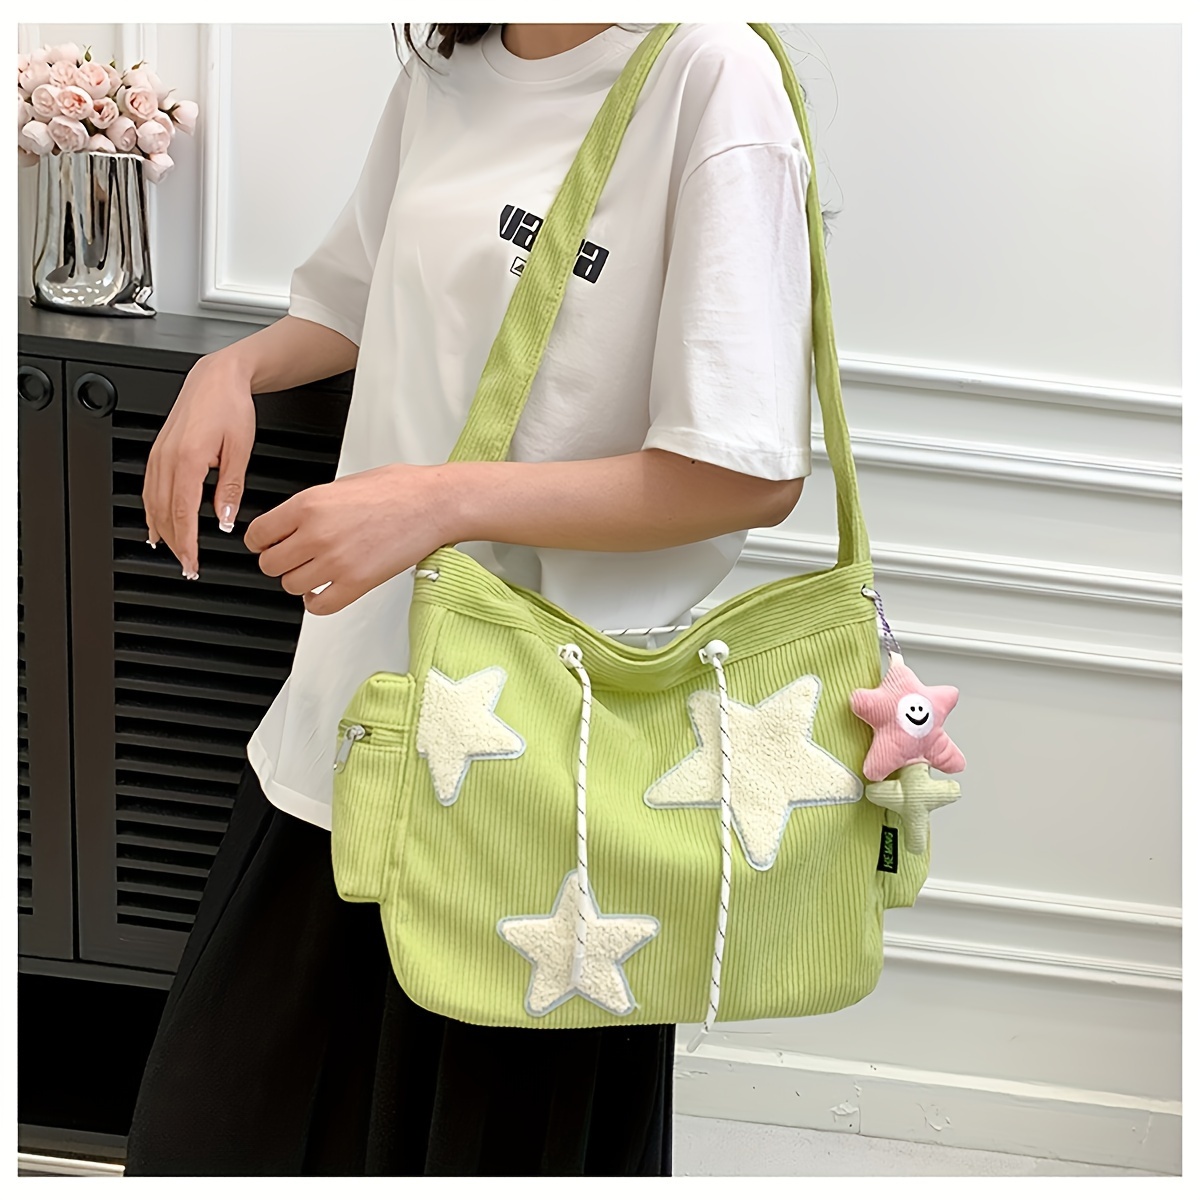 

Back To School Star Pattern Tote Hobo Bag, Casual Large Capacity Shoulder Bag, Cute Star Drawstring Design Crossbody Bag For Women Teen Girls School